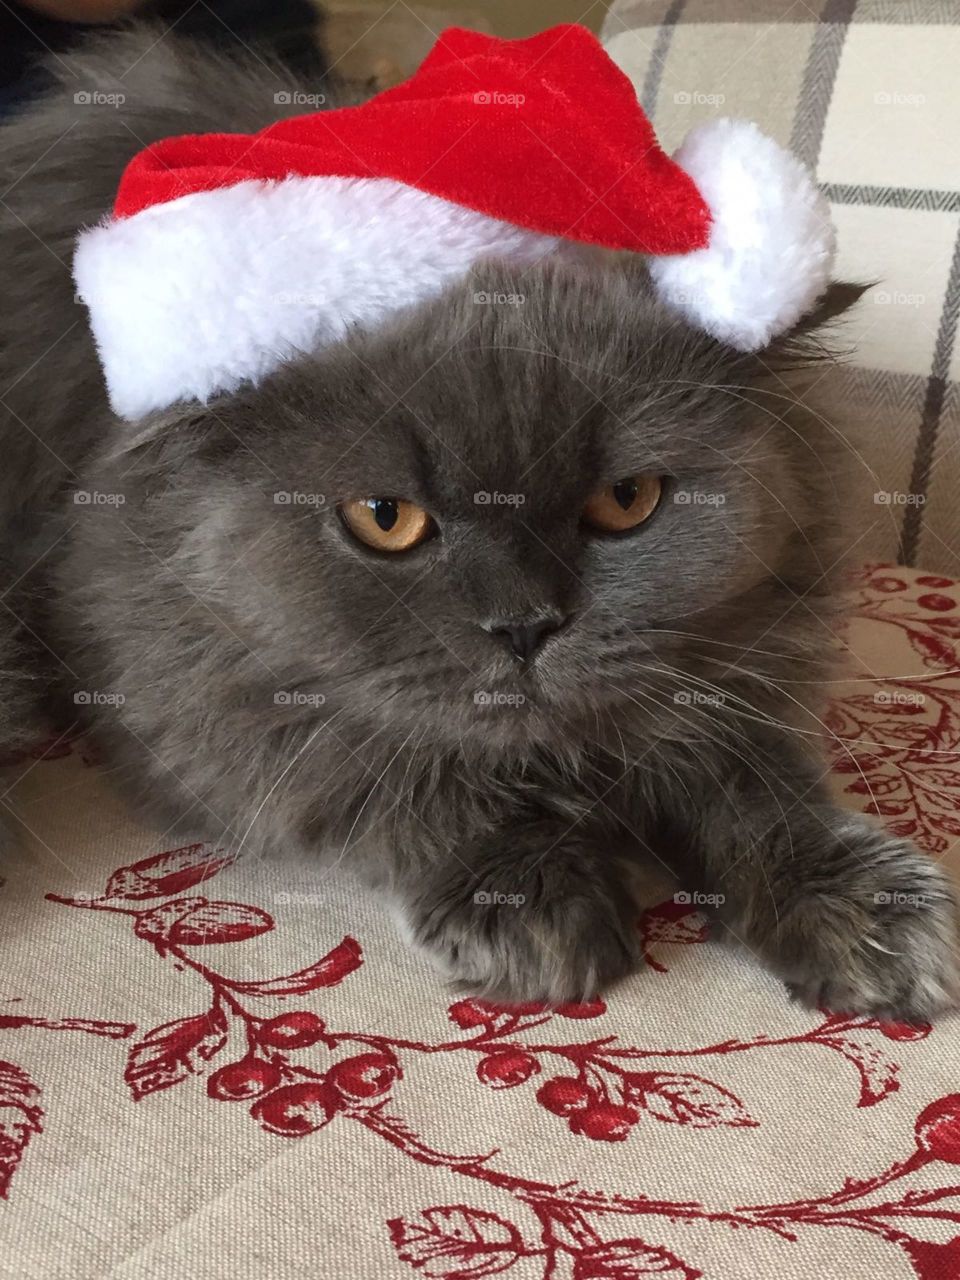 Grumpy Christmas cat